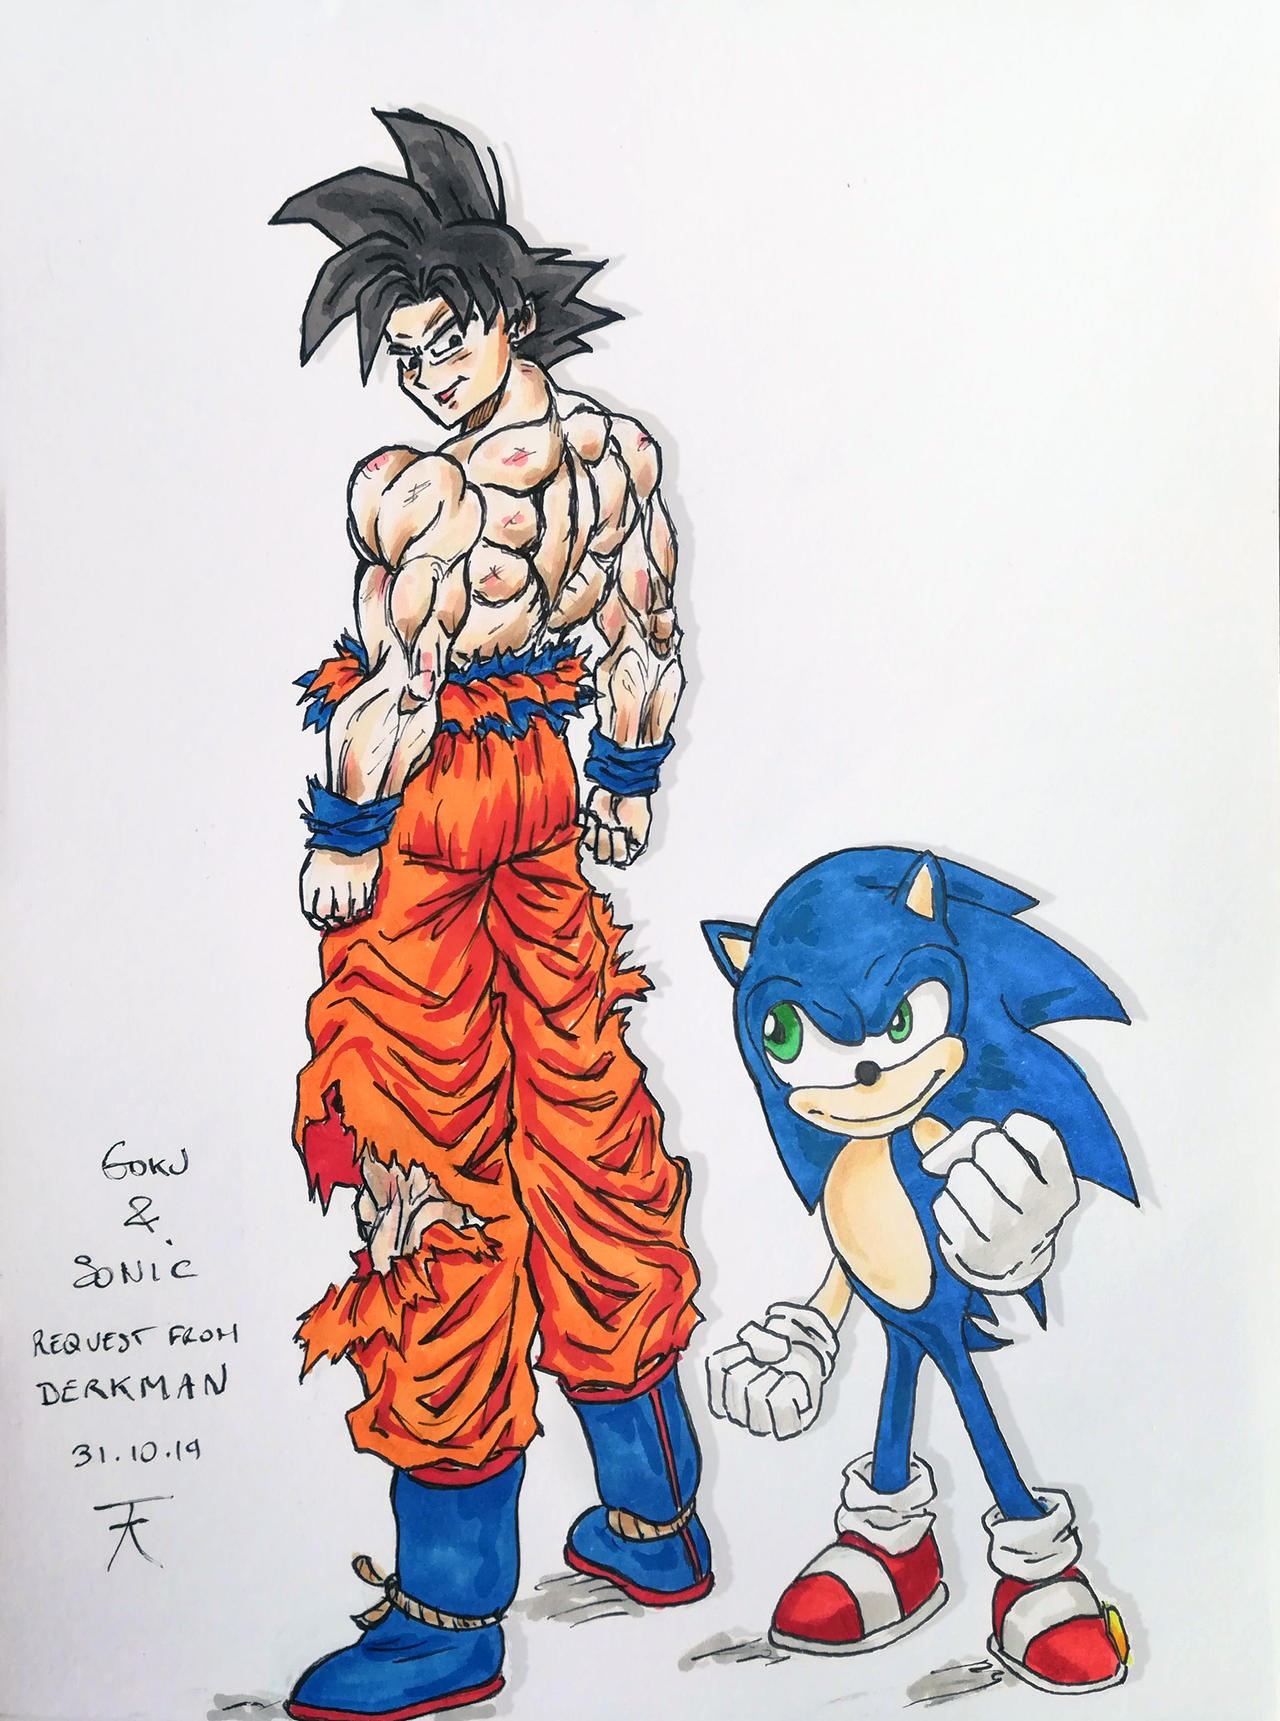 Goku and Sonic by fffredfff on DeviantArt